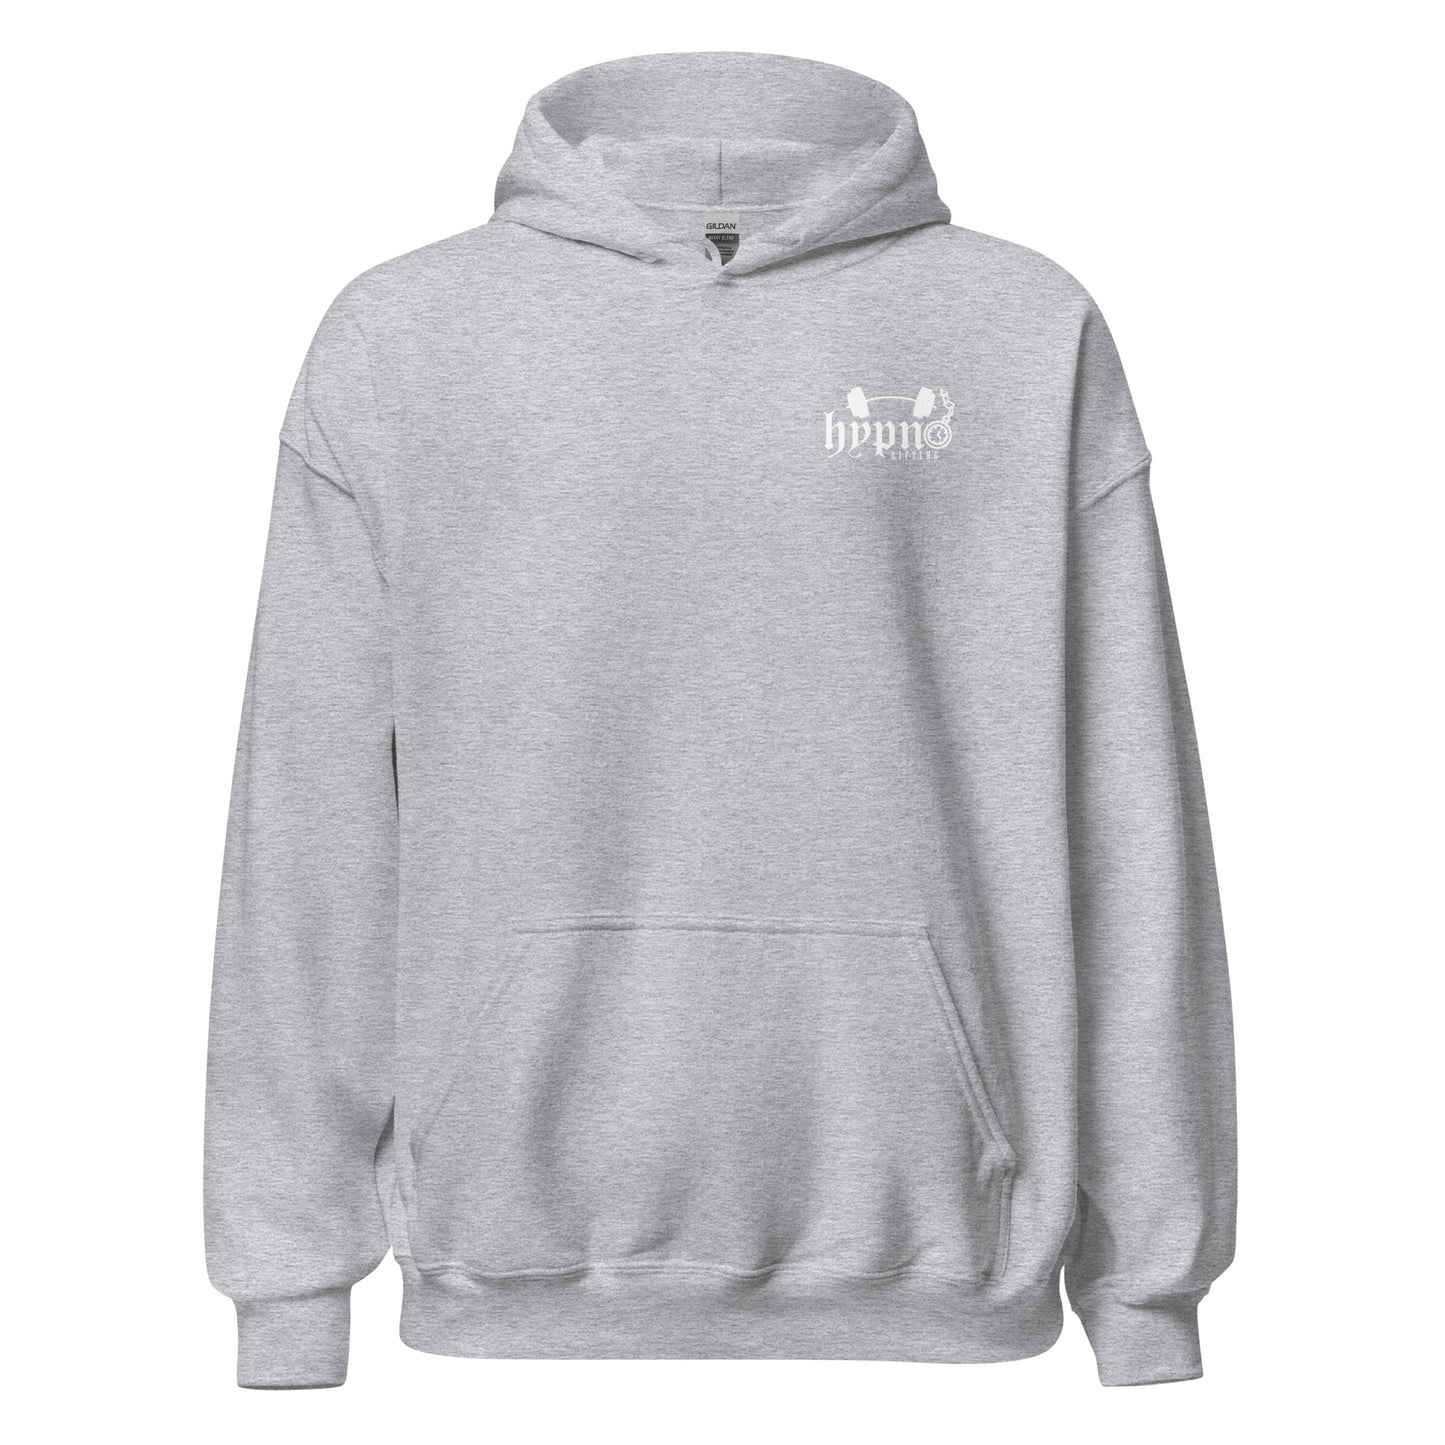 Hypno Lifting white logo front design unisex hoodie